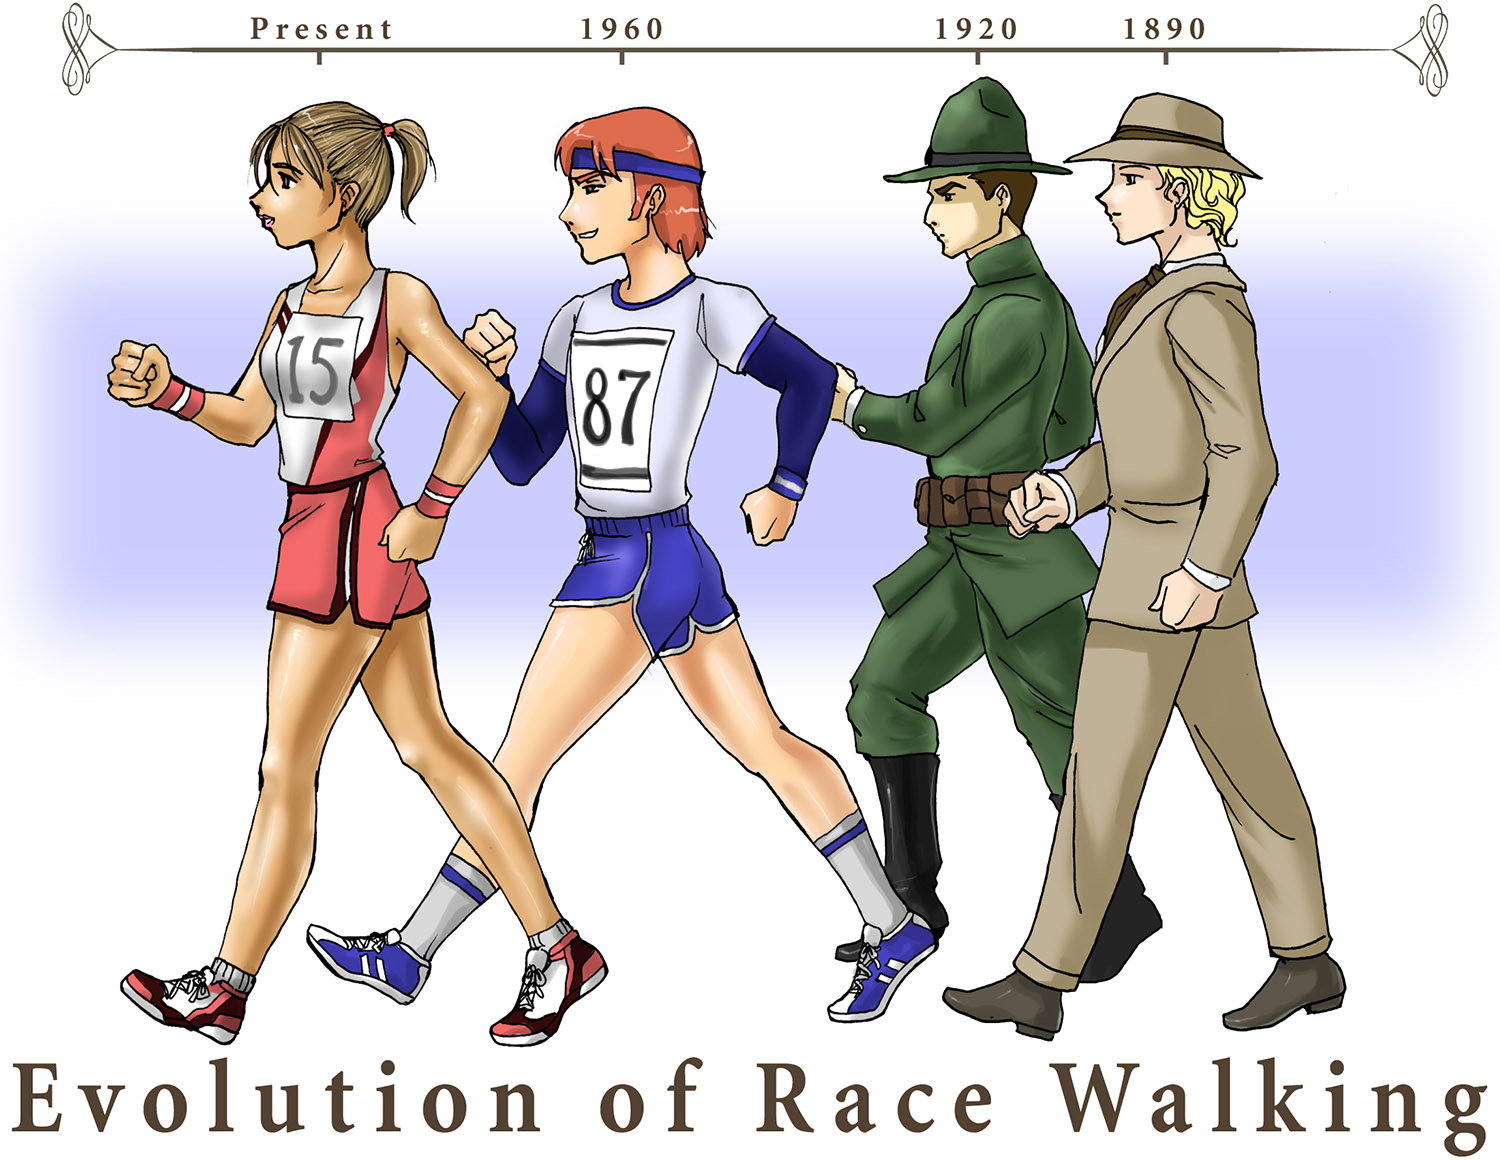 Evolution of Race Walking